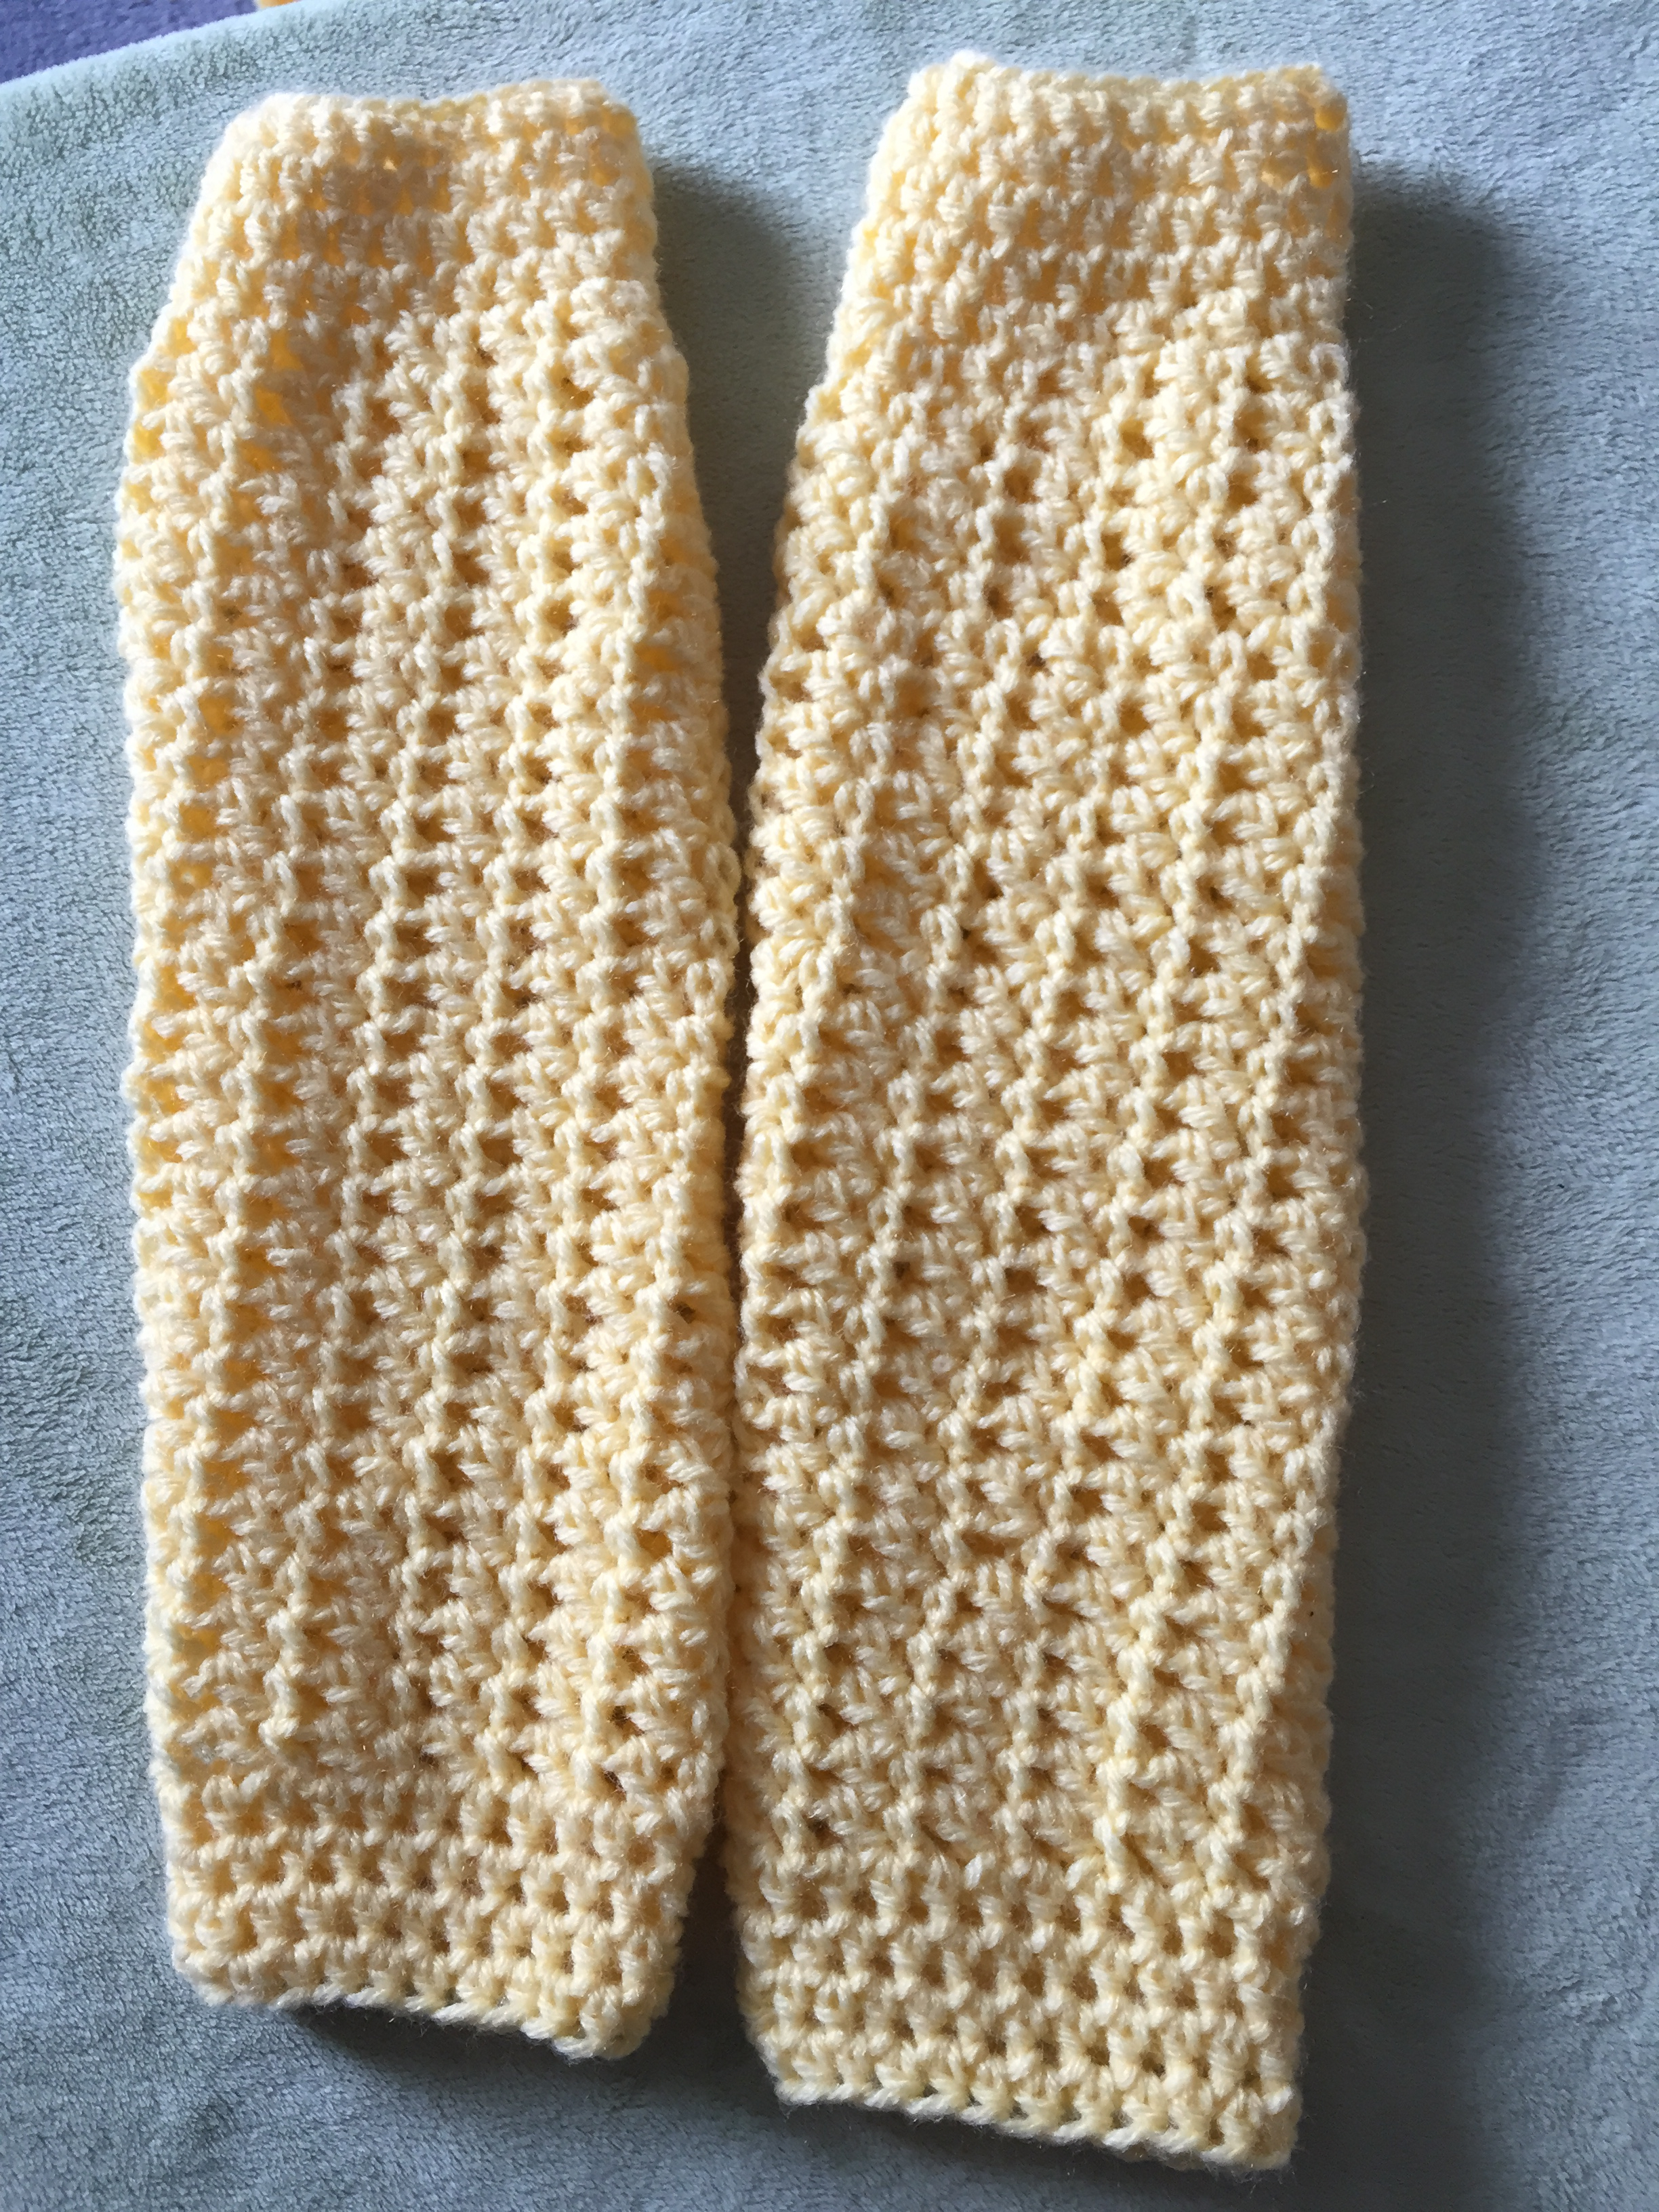 Leg Warmer Crochet Pattern Crochet Boot Cuffs Leg Warmers And More Free Patterns Diy From Home